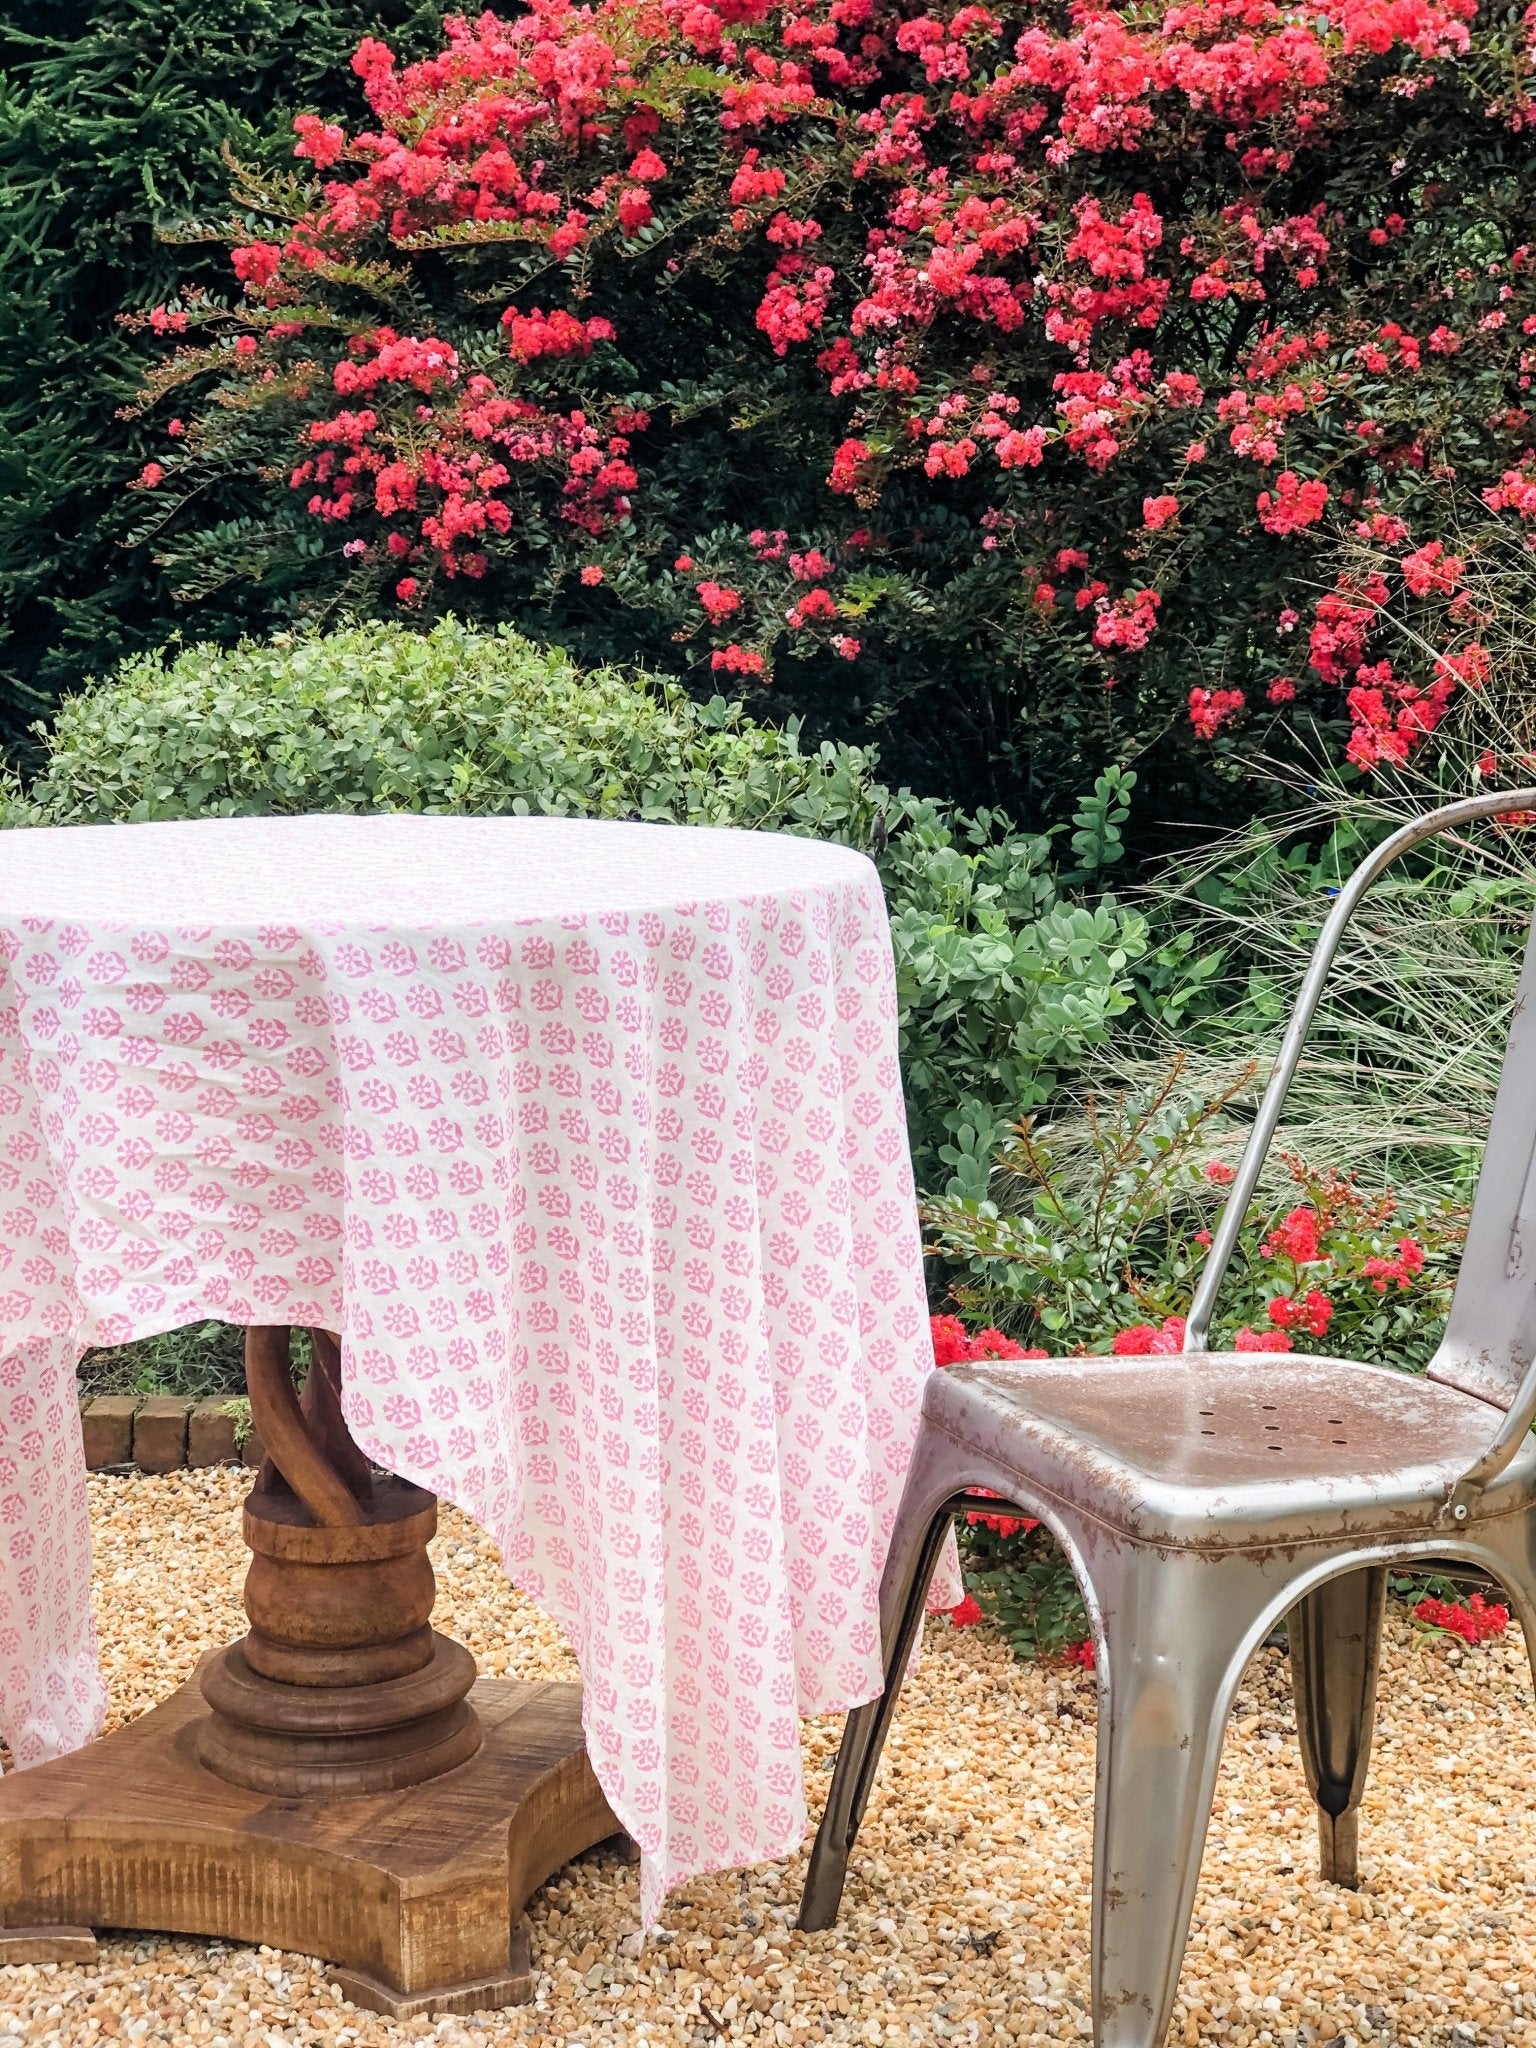 46"x78" Lightweight Tablecloth in Kestrel Pink - Abigail Fox Designs